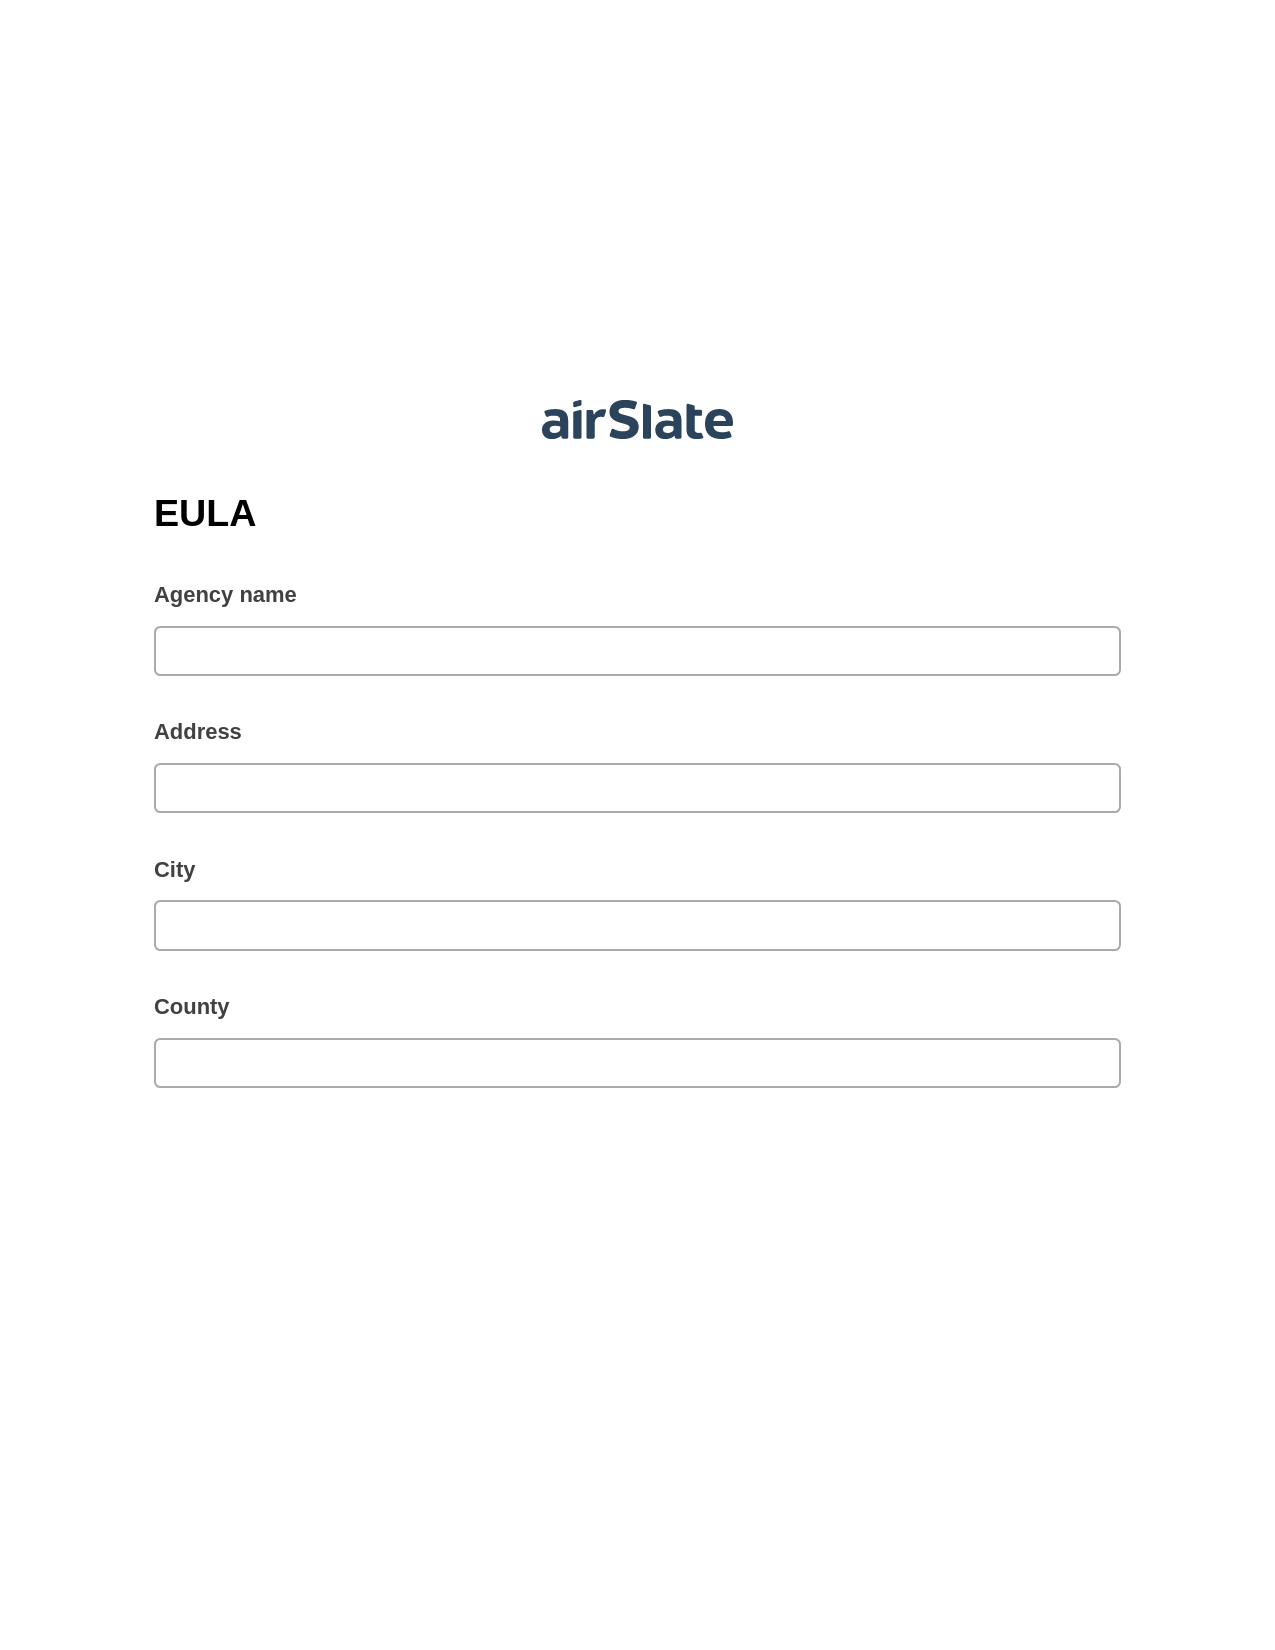 Multirole EULA Pre-fill from Google Sheet Dropdown Options Bot, SendGrid send Campaign bot, Archive to SharePoint Folder Bot